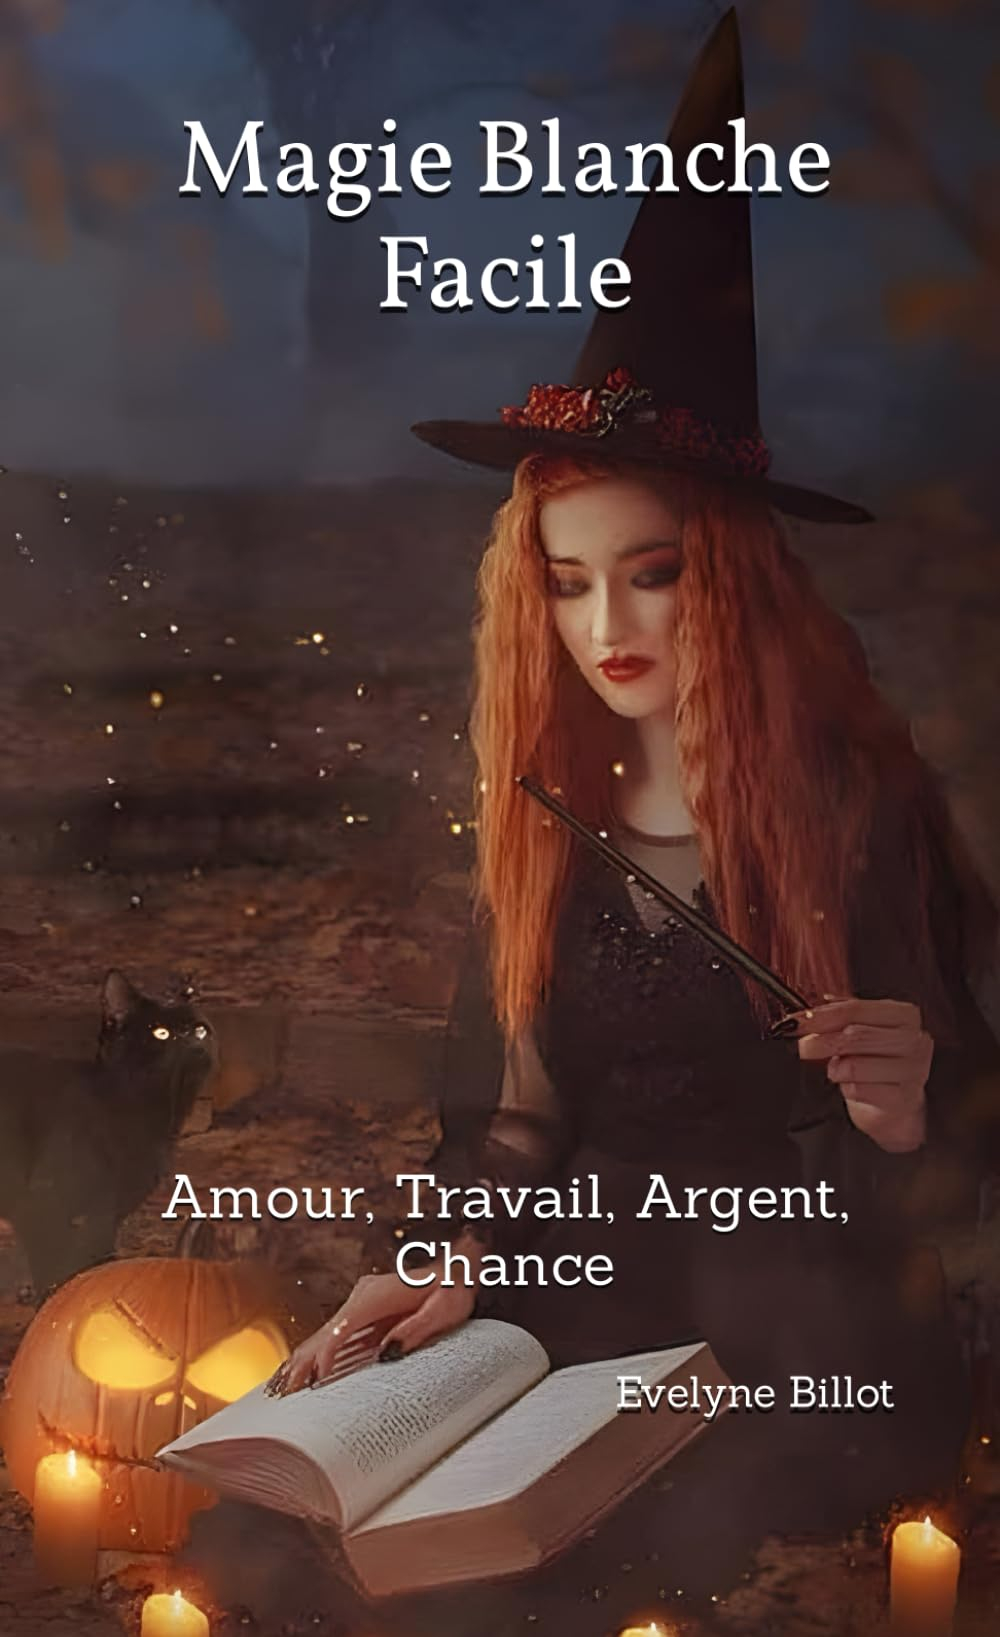 Magie Blanche Facile: Amour, Travail, Argent, Chance